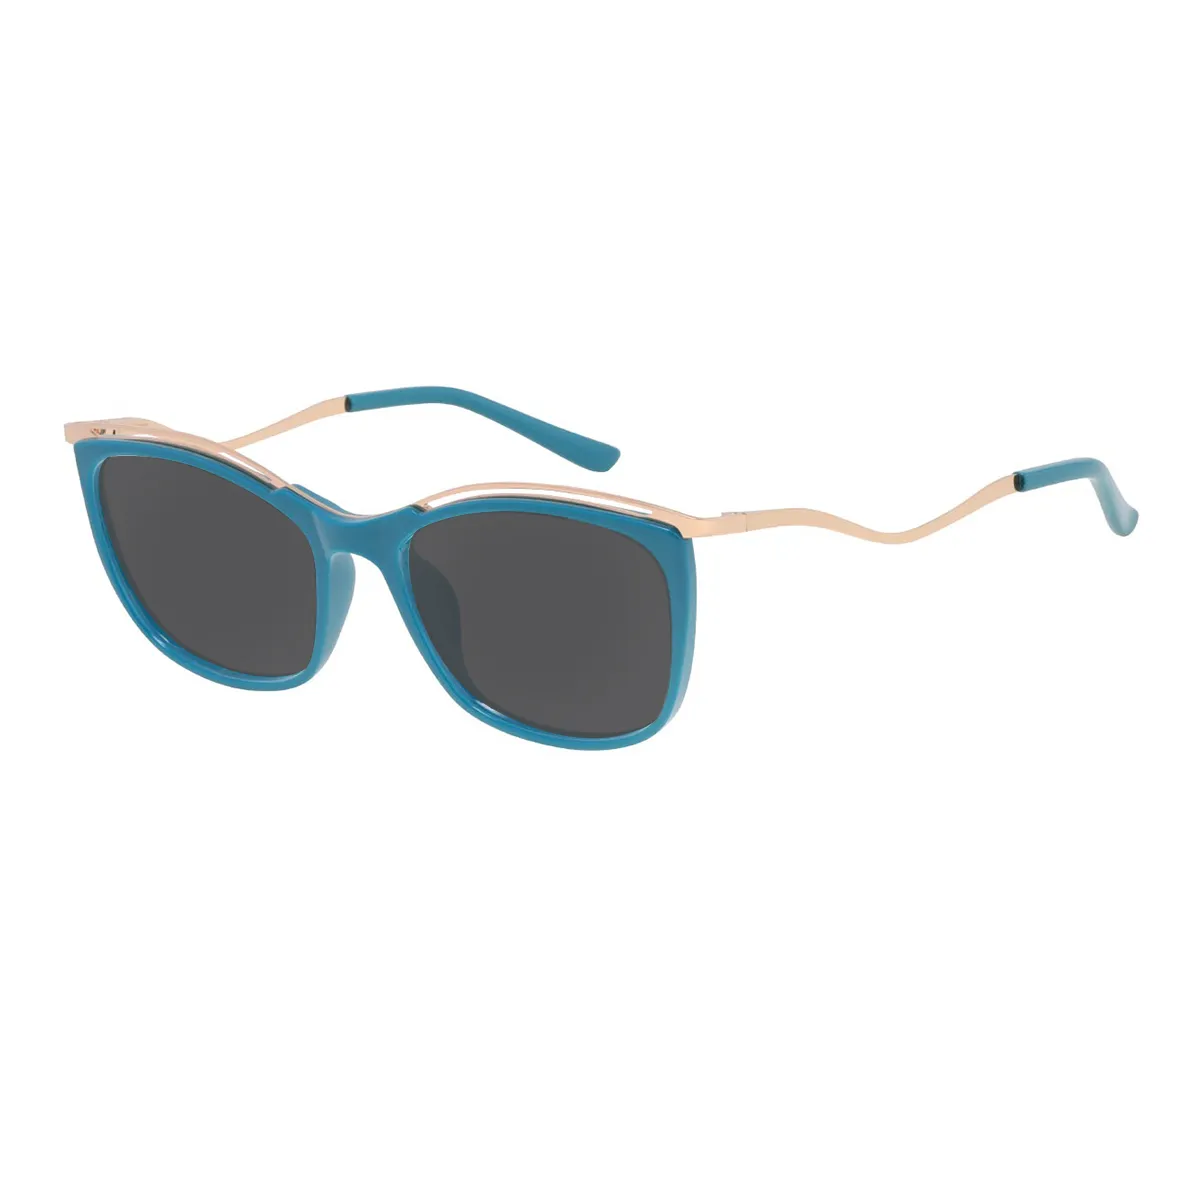 Ainslie - Rectangle Green Sunglasses for Women